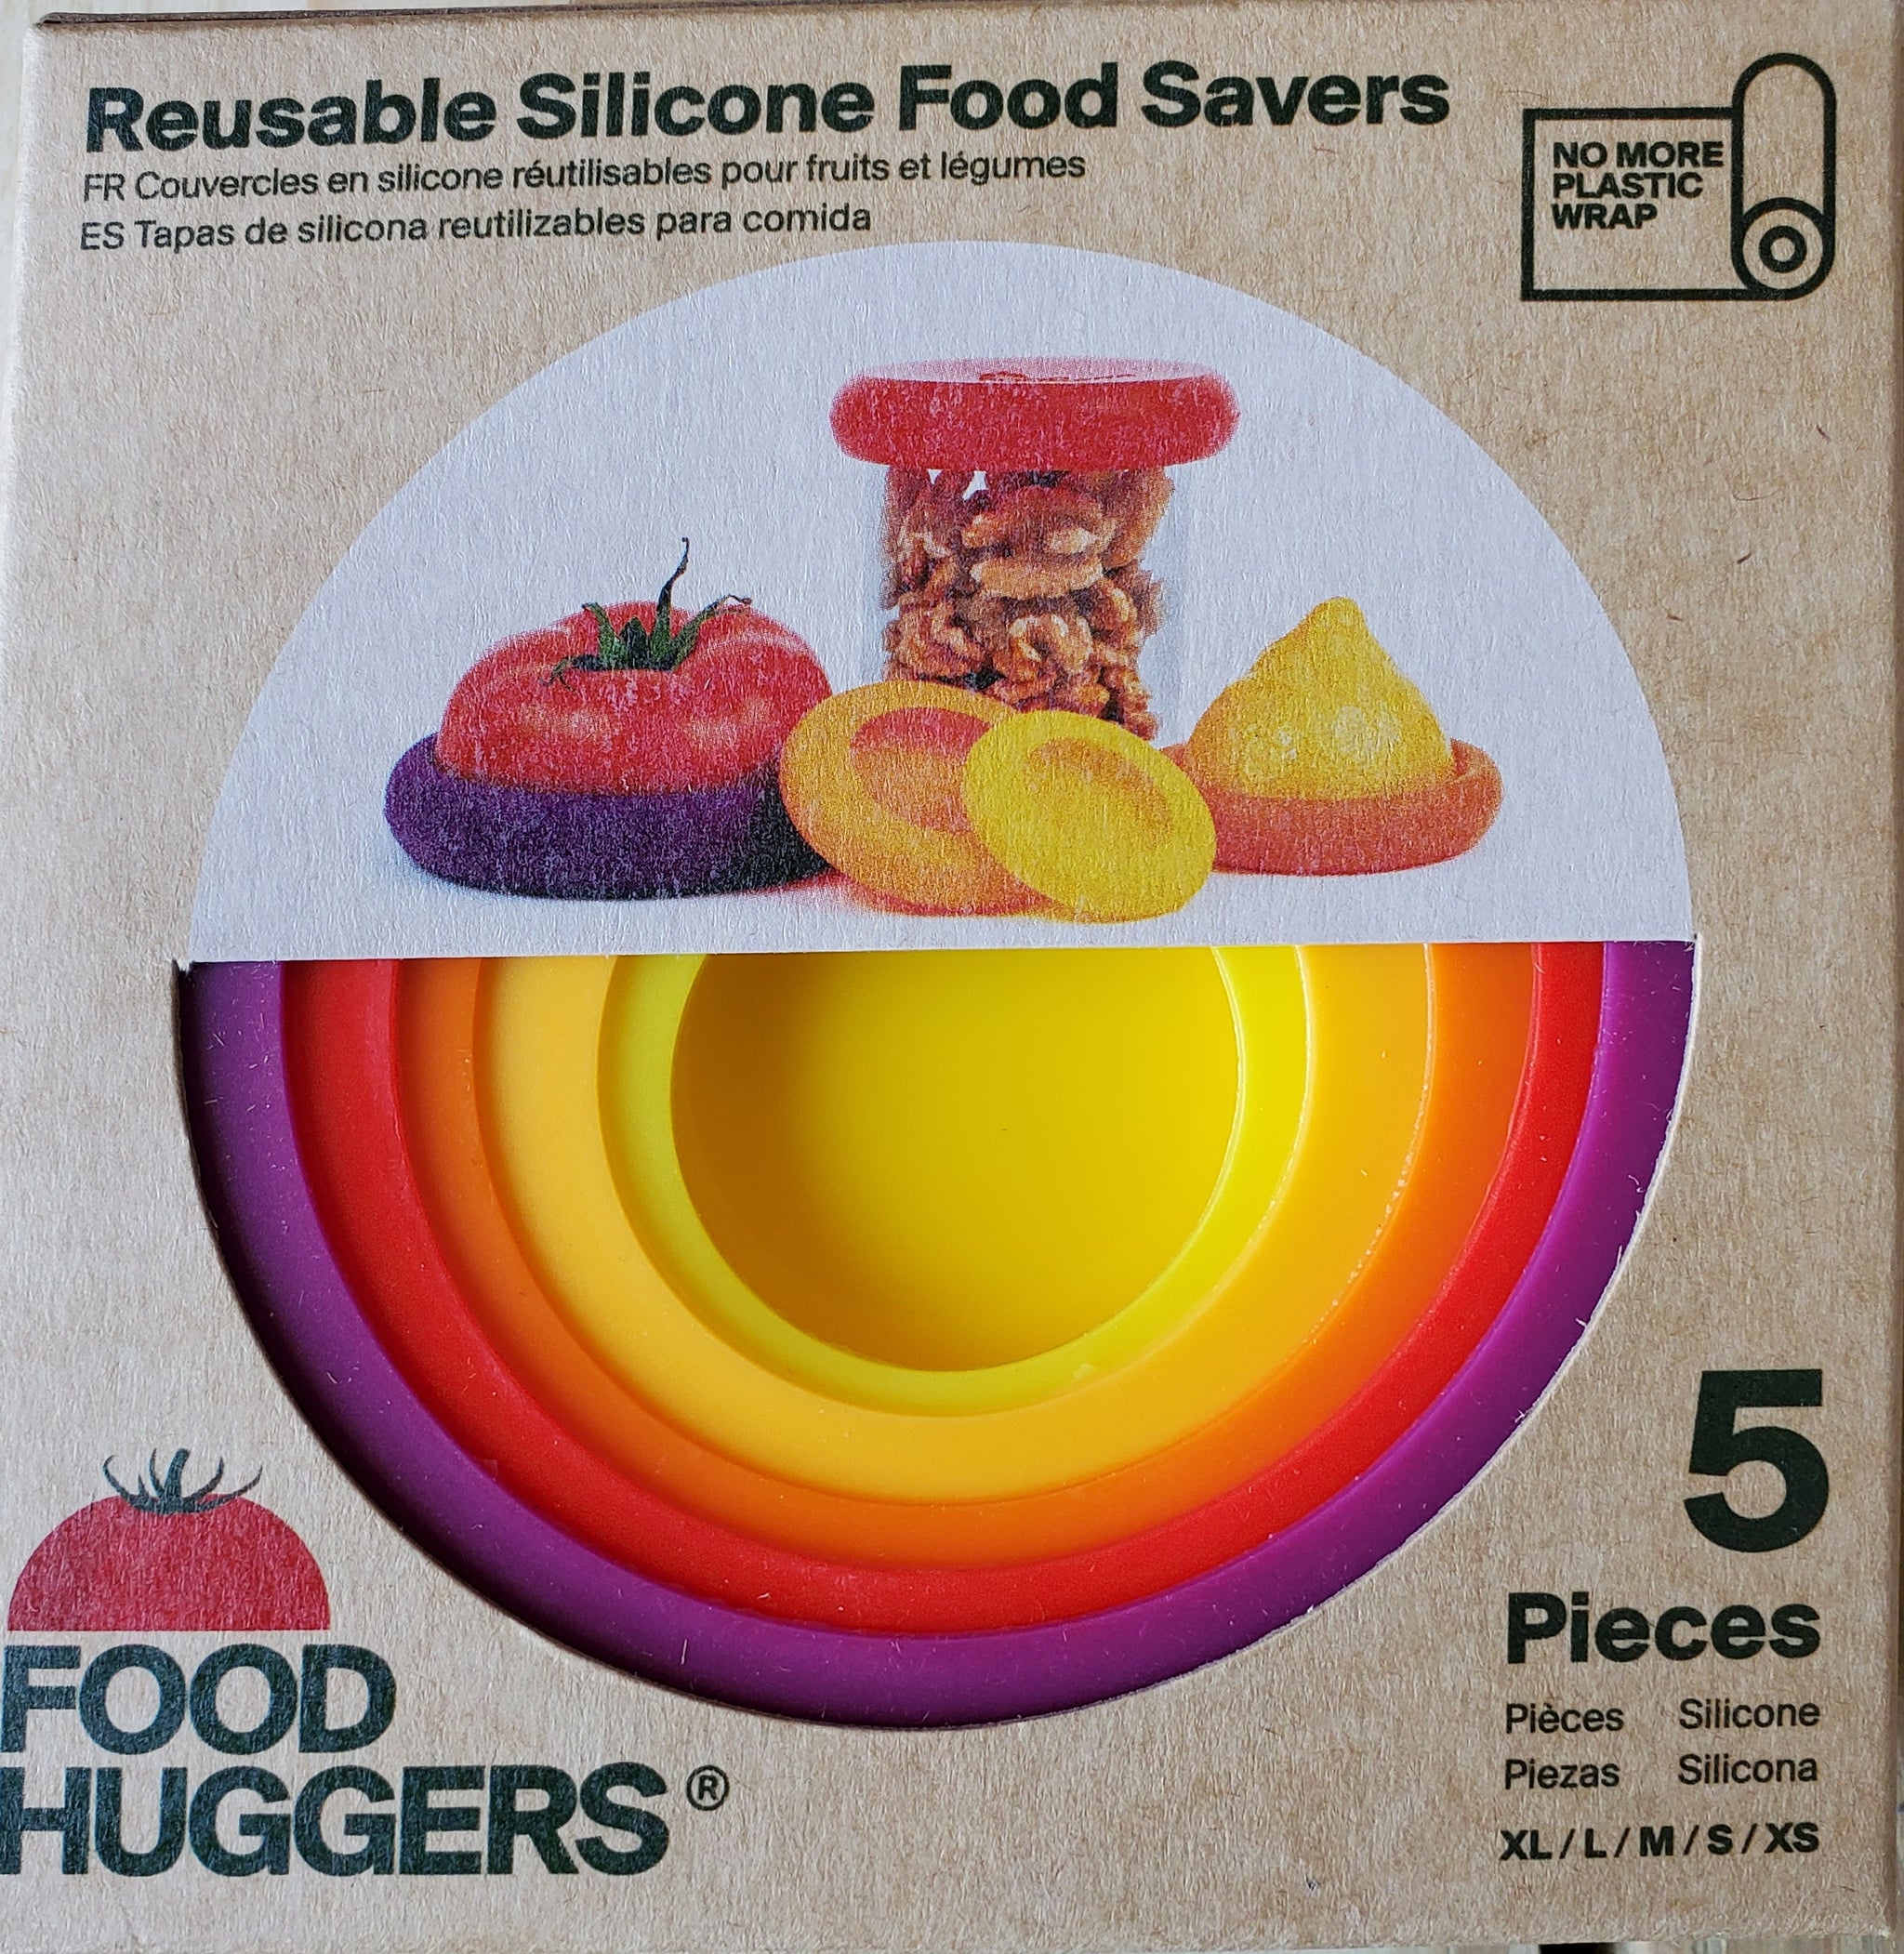 Food Huggers Food Safe Silicone